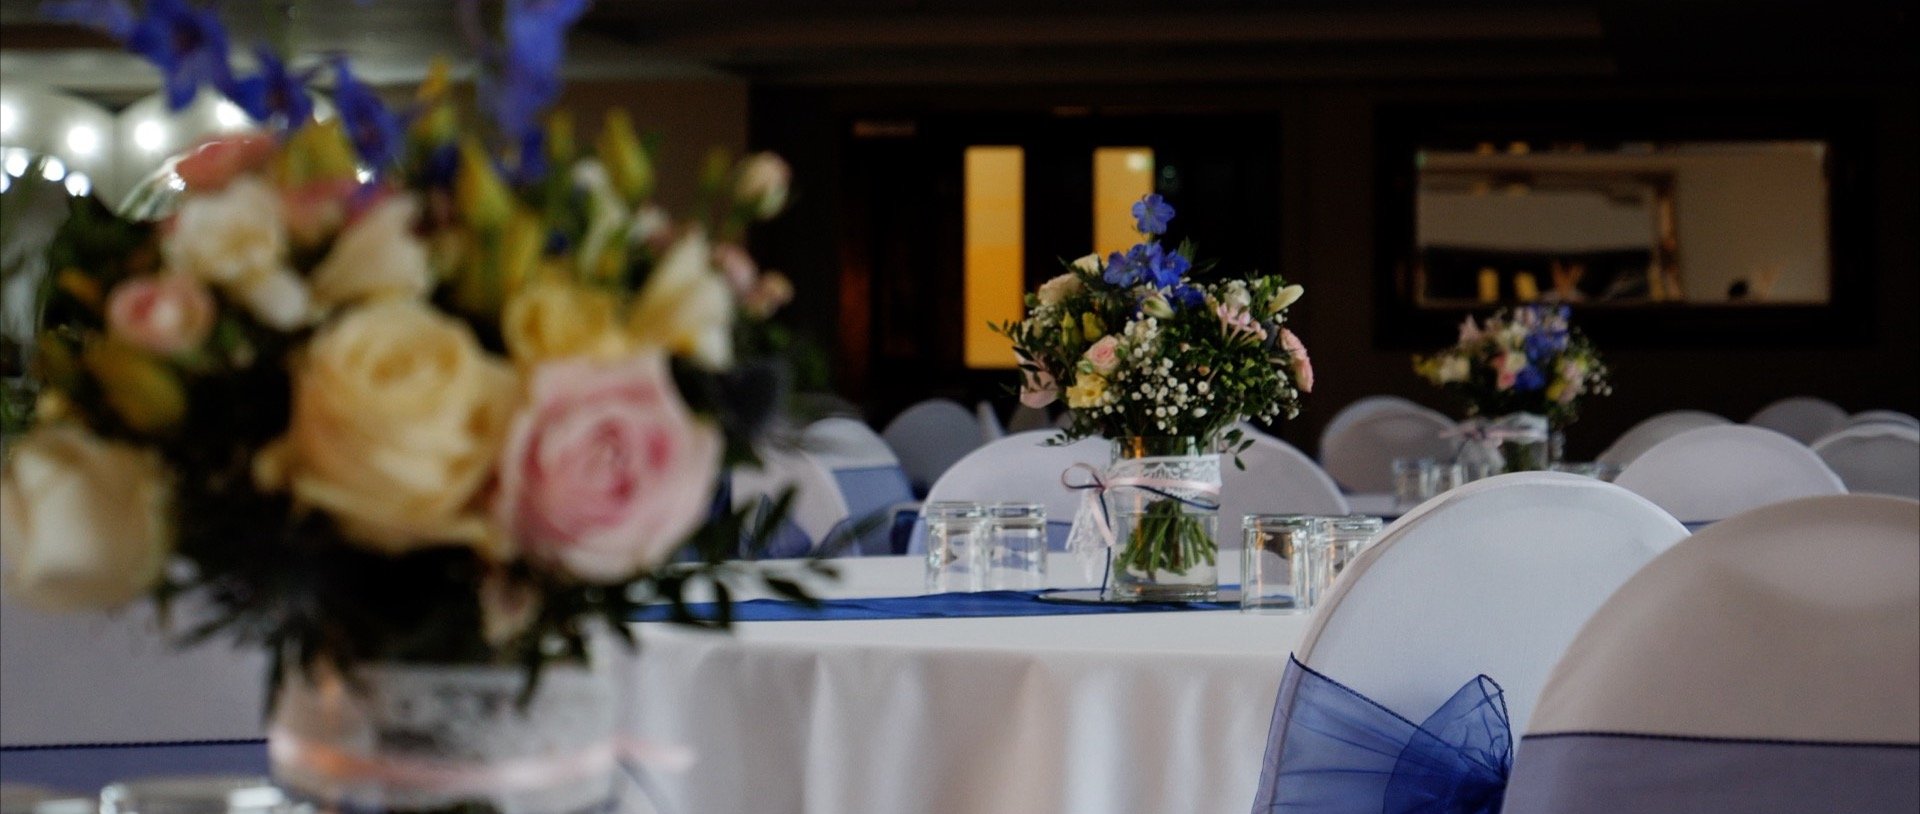 Rayleigh Club Essex wedding venue table settings.jpg